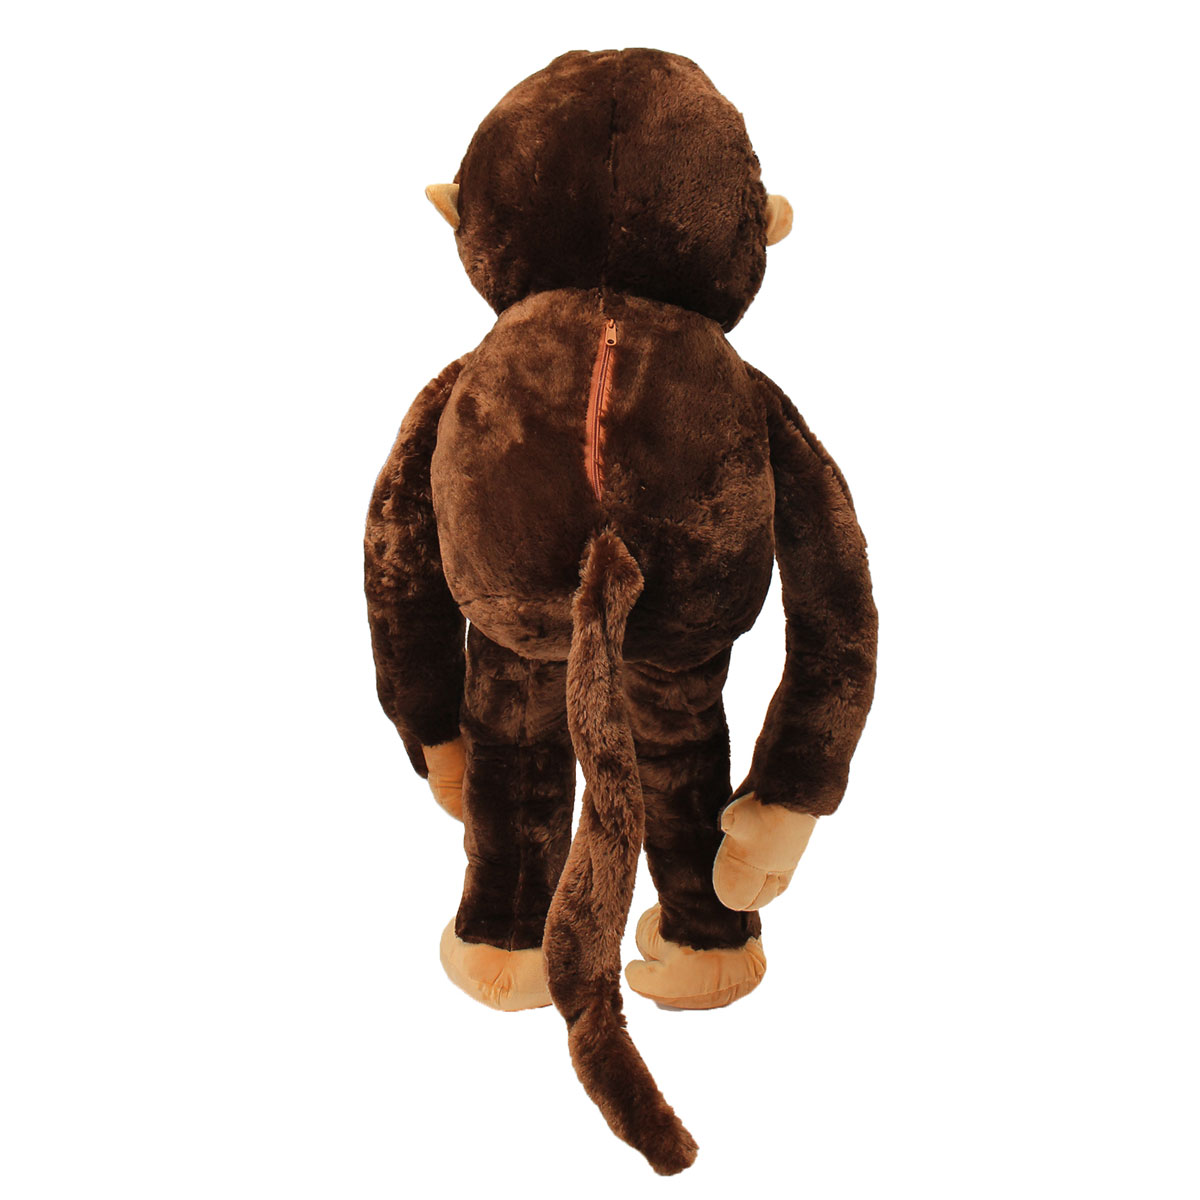 Giant Huge Large Big Stuffed Animal Plush Brown Monkey Bear Kid's Doll Toy gifts